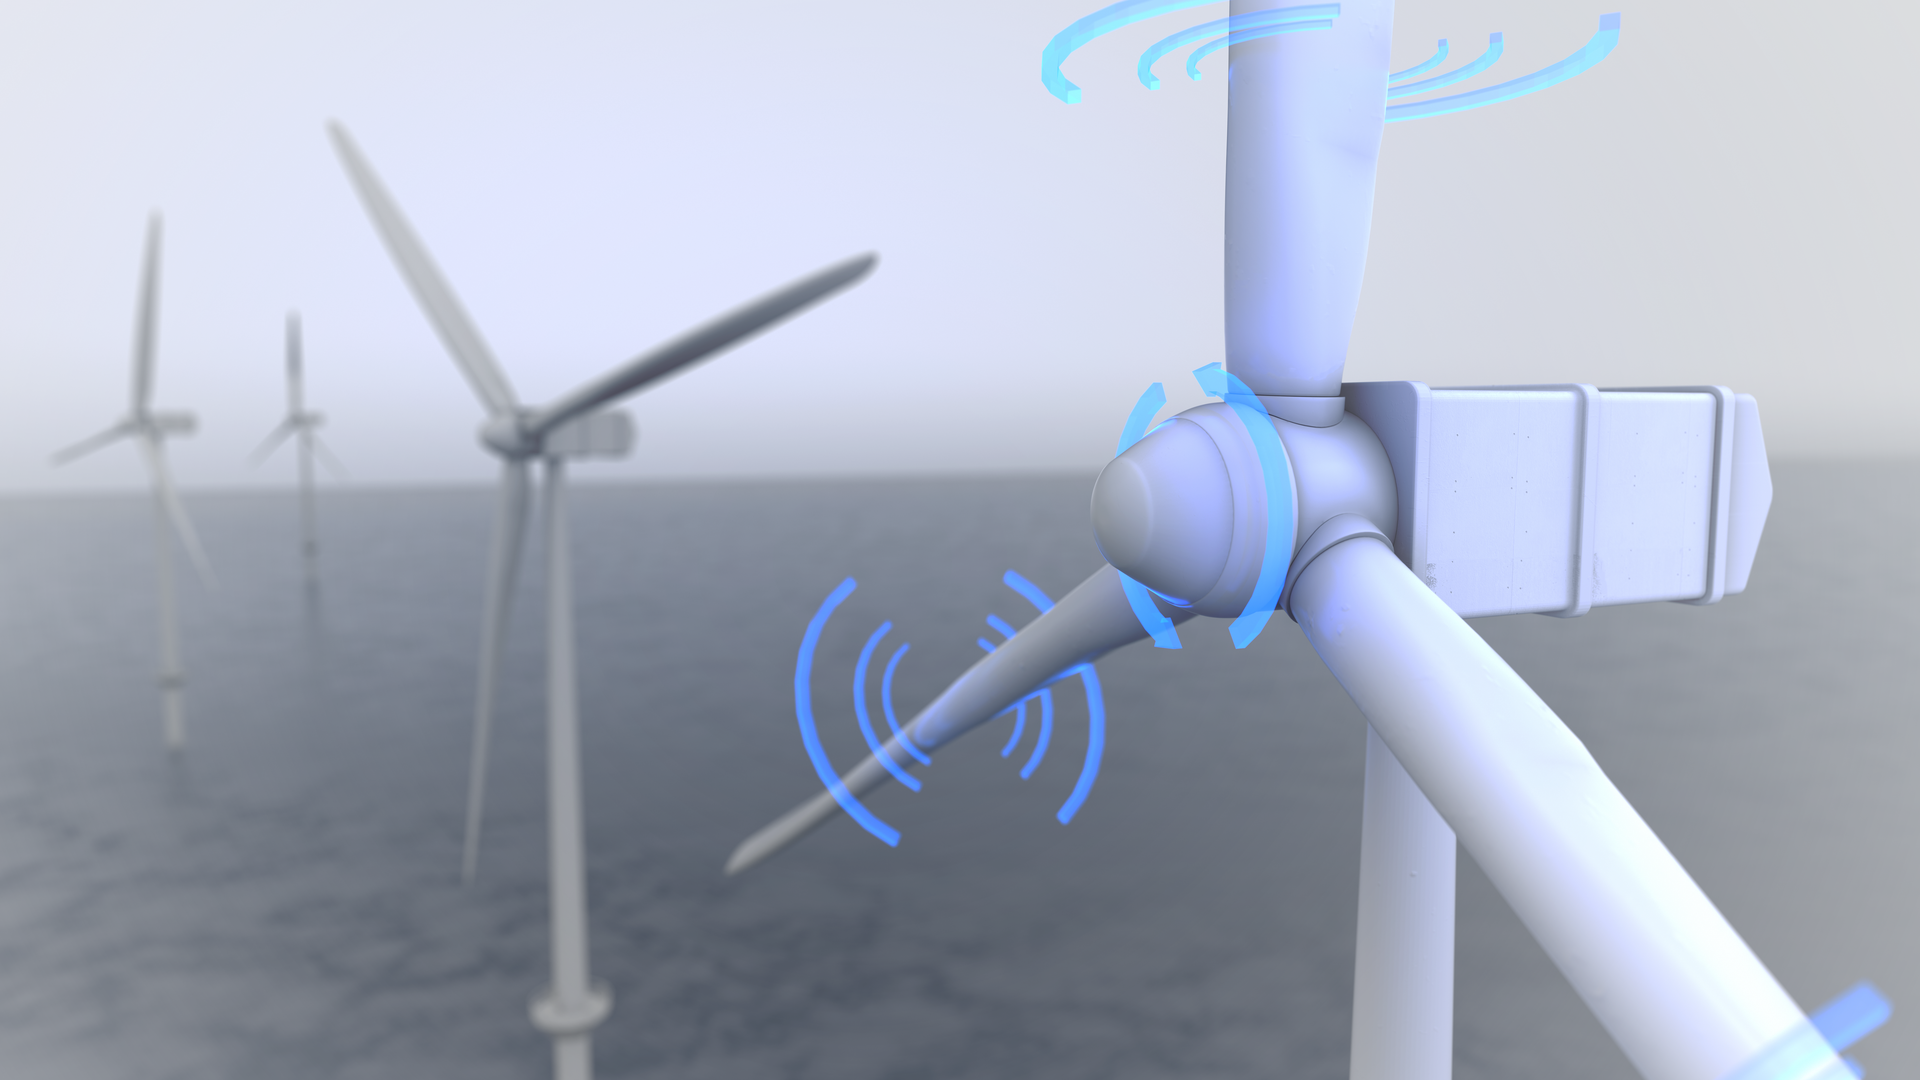 Windturbine Offshore application